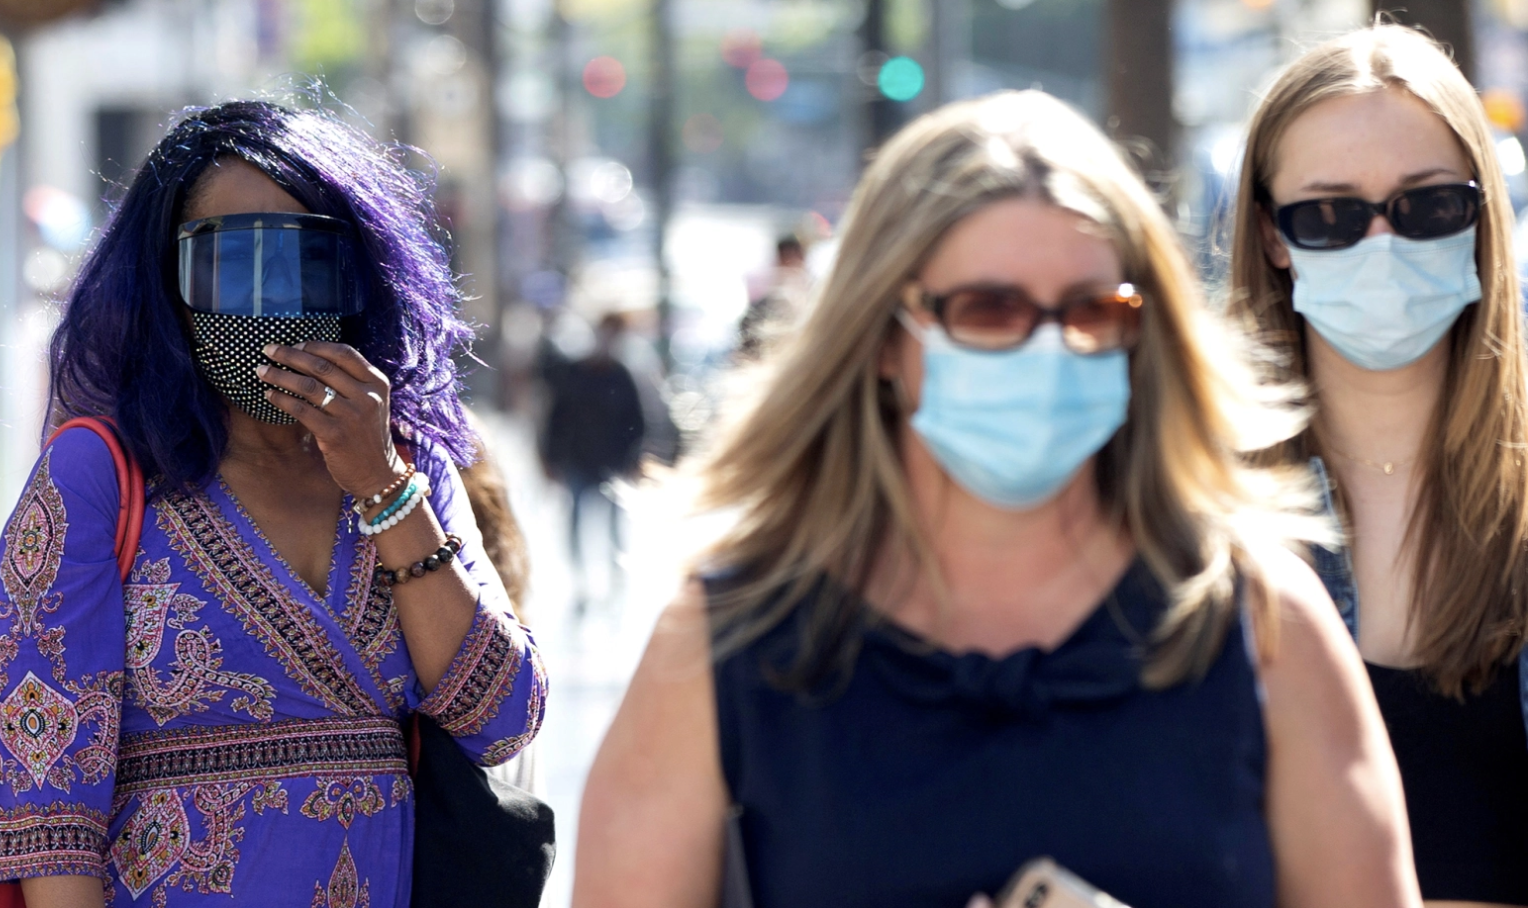 LA Residents wearing masks outside